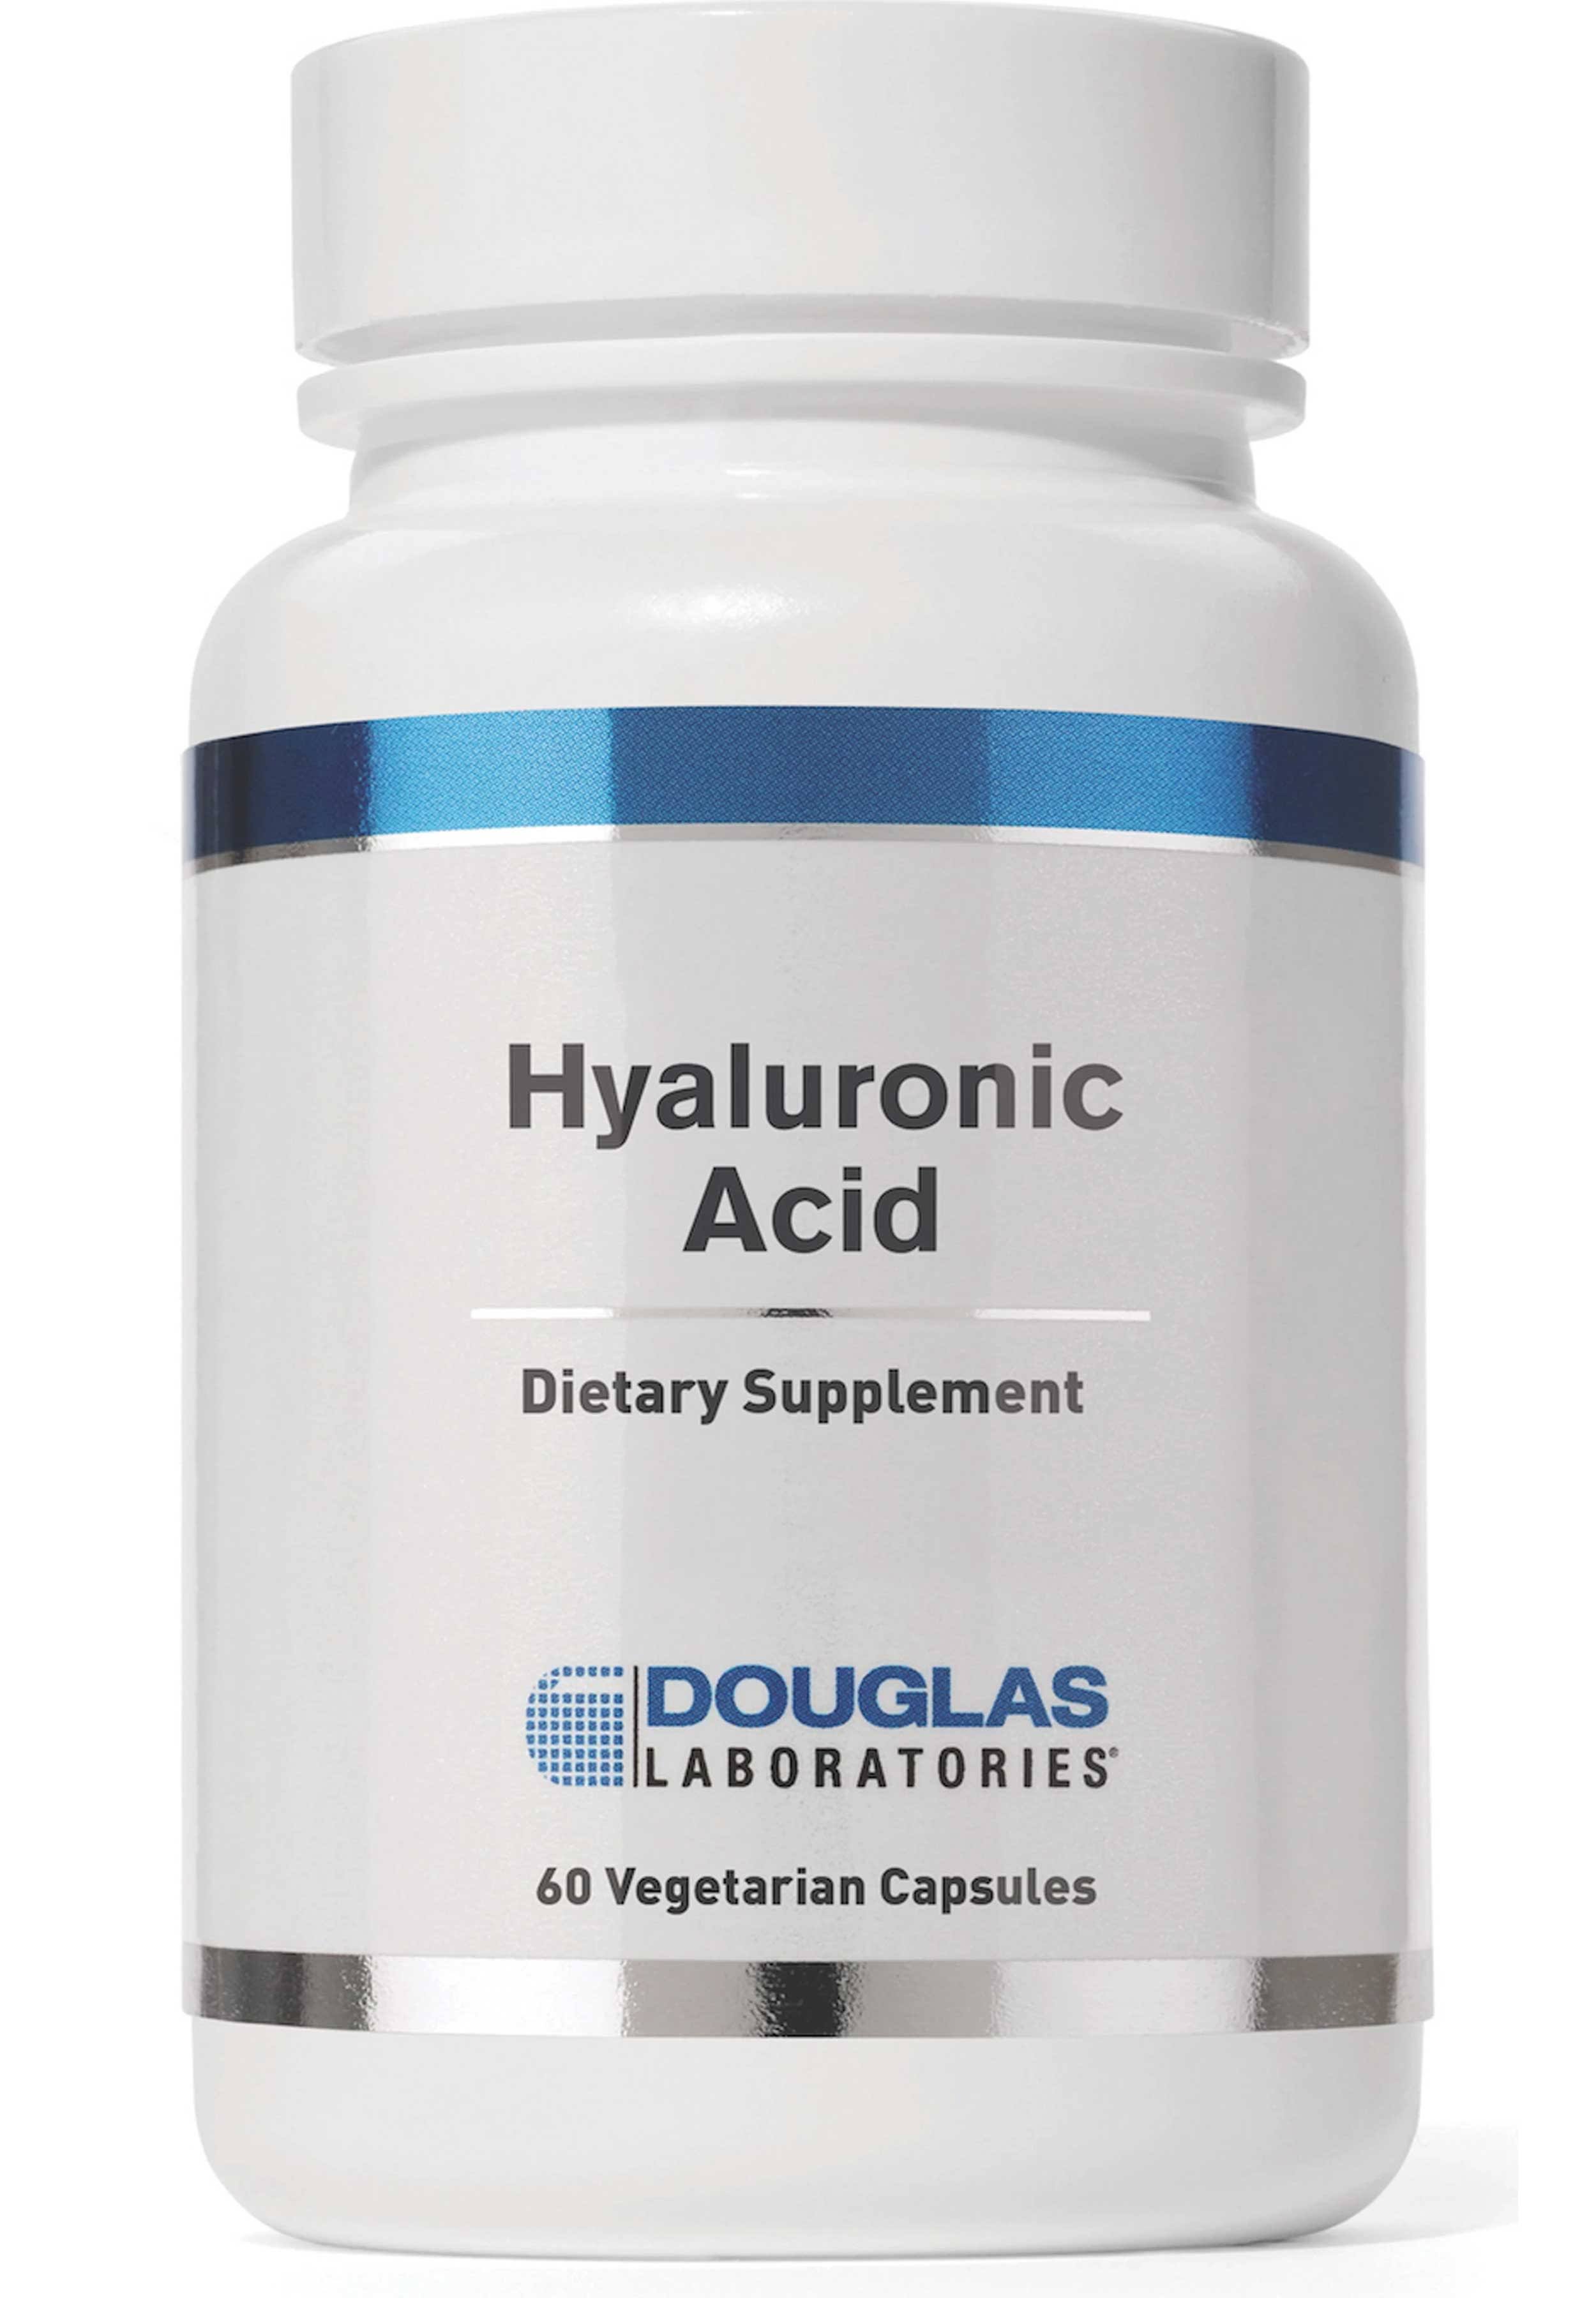 Douglas Laboratories - Hyaluronic Acid - 60 Capsules